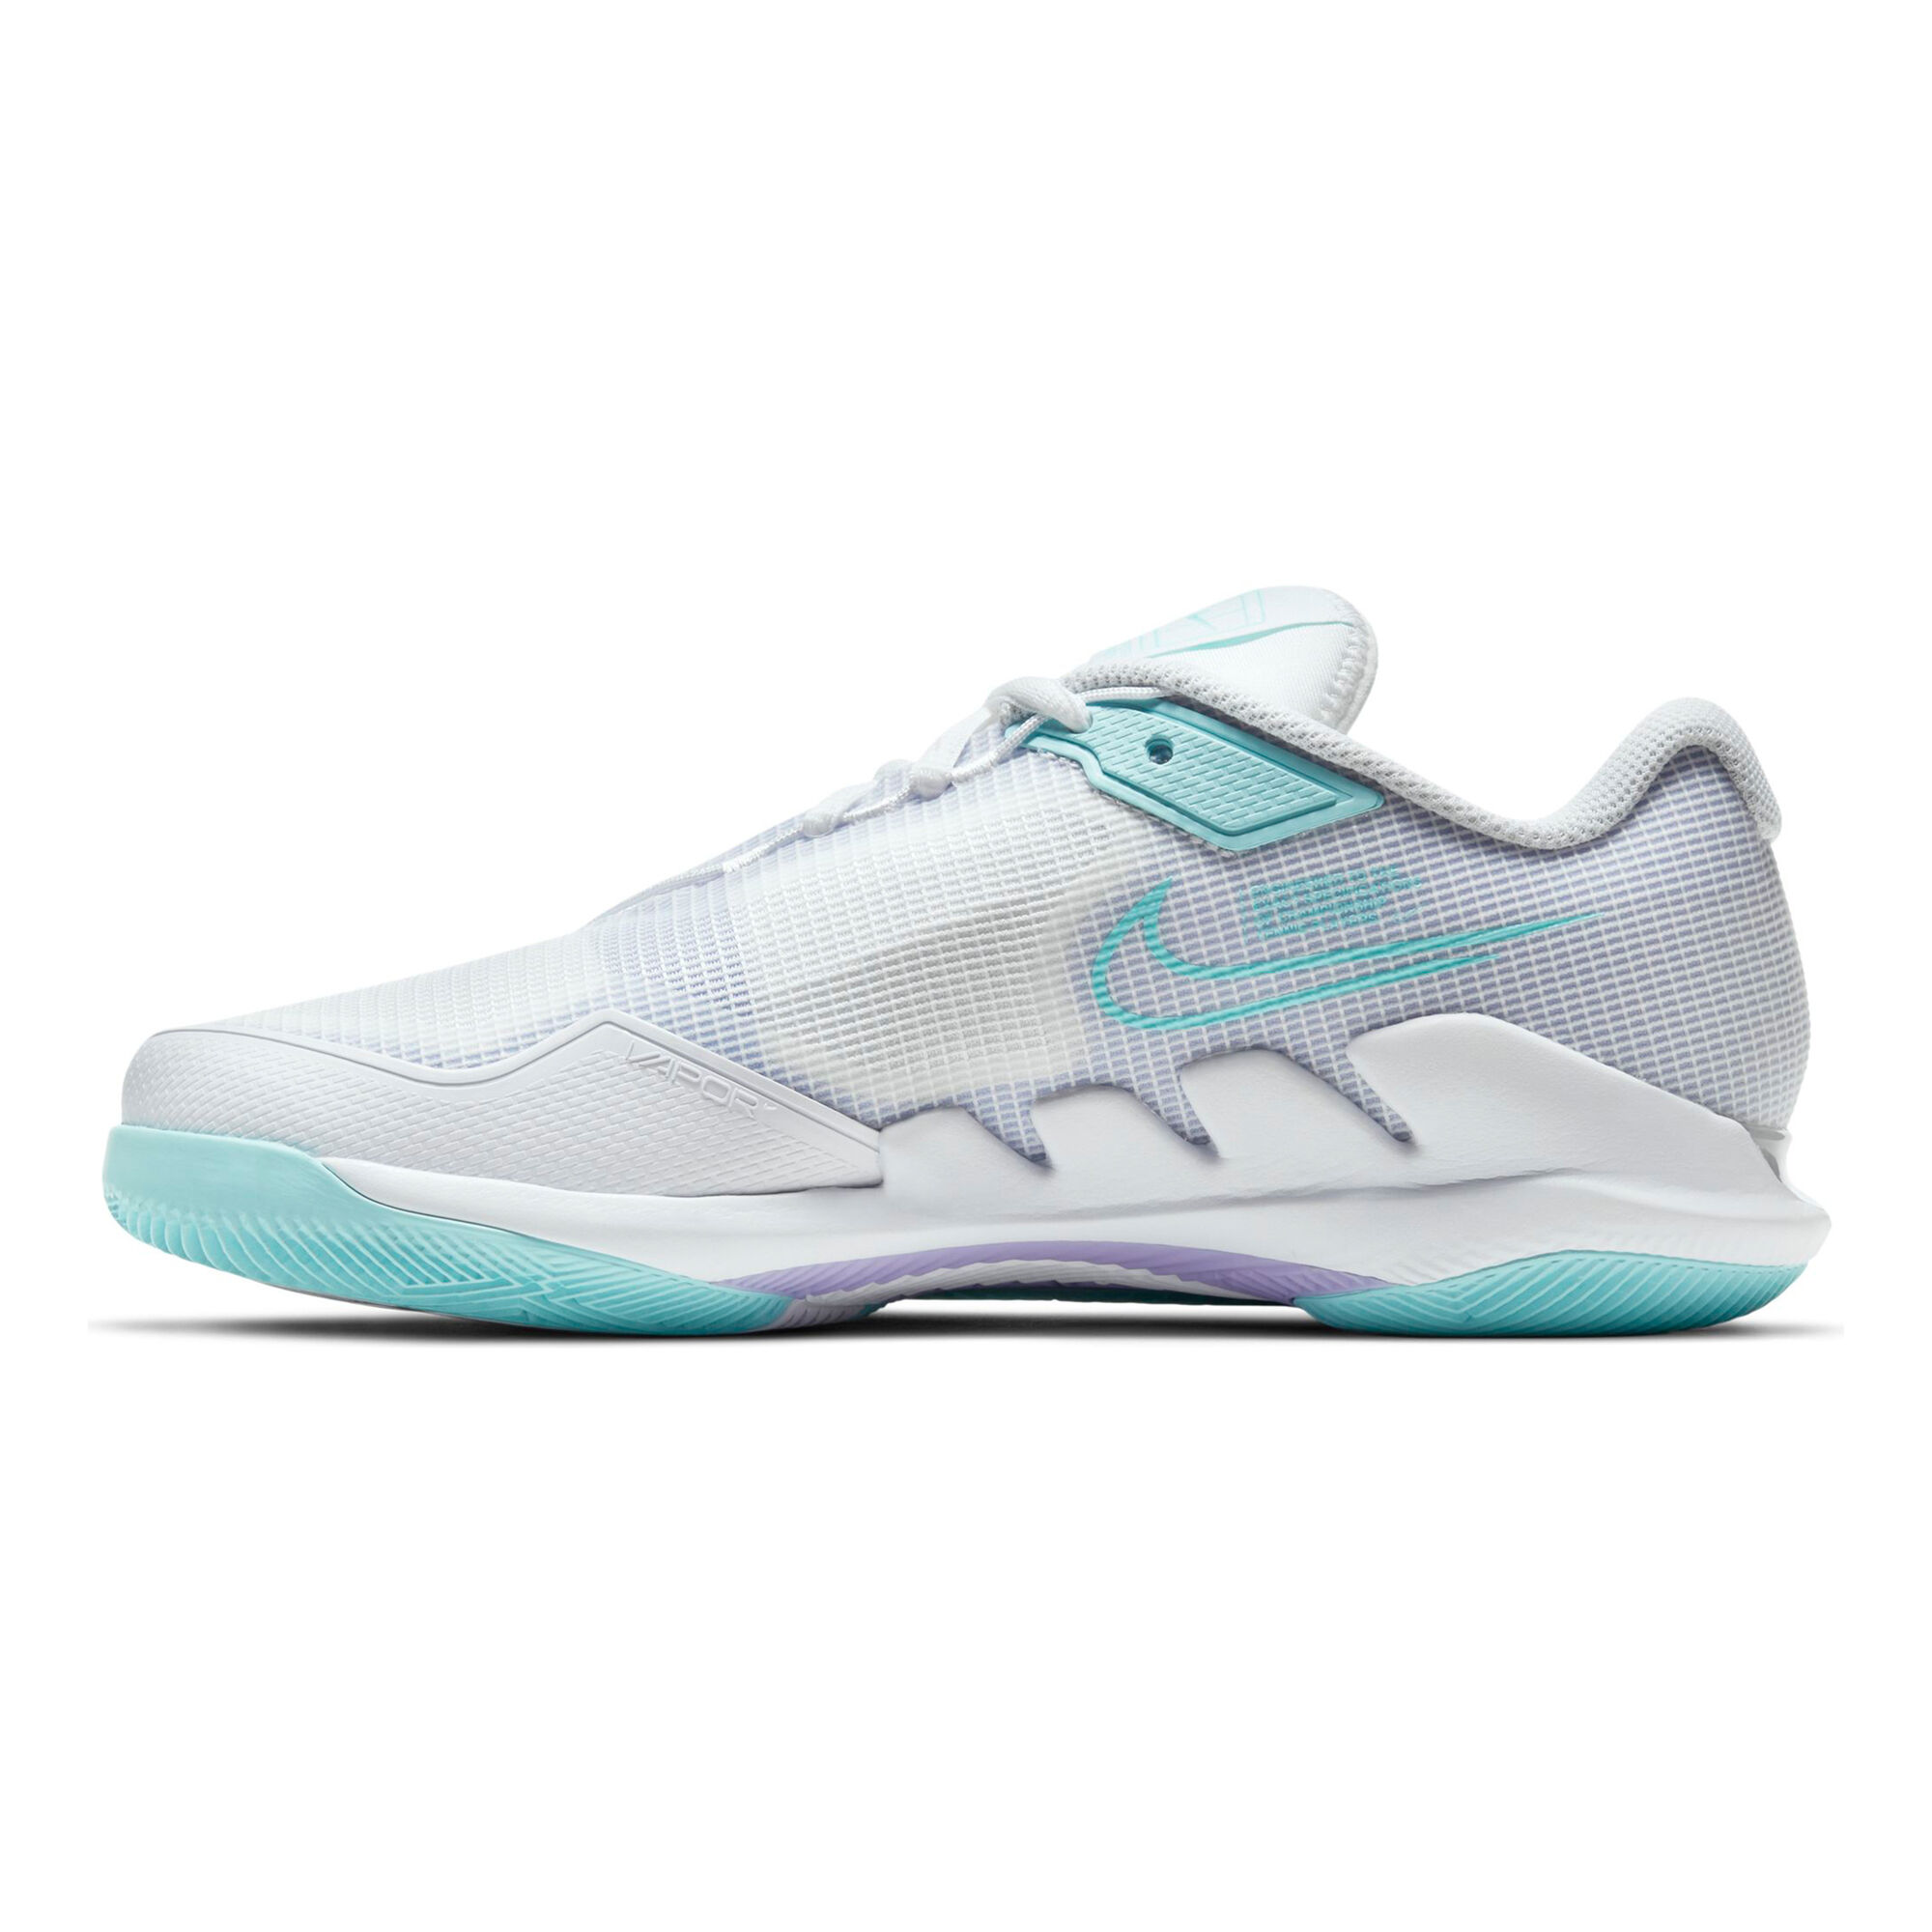 buy Nike Zoom Vapor Pro All Court Shoe Women - White, Turquoise online ...